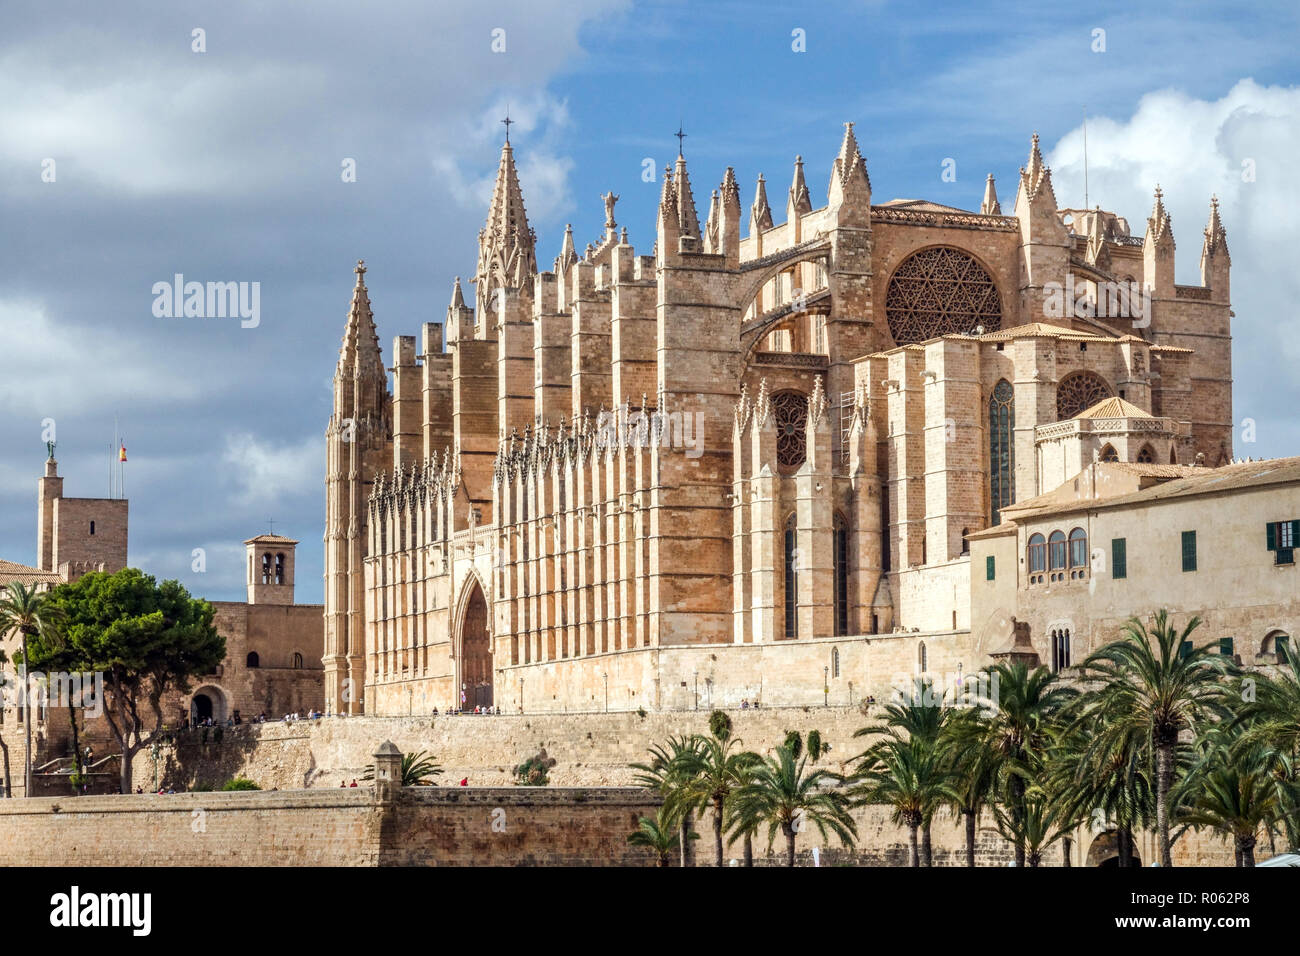 Blick auf die Kathedrale von Palma de Mallorca Spanien Kathedralen Stockfoto